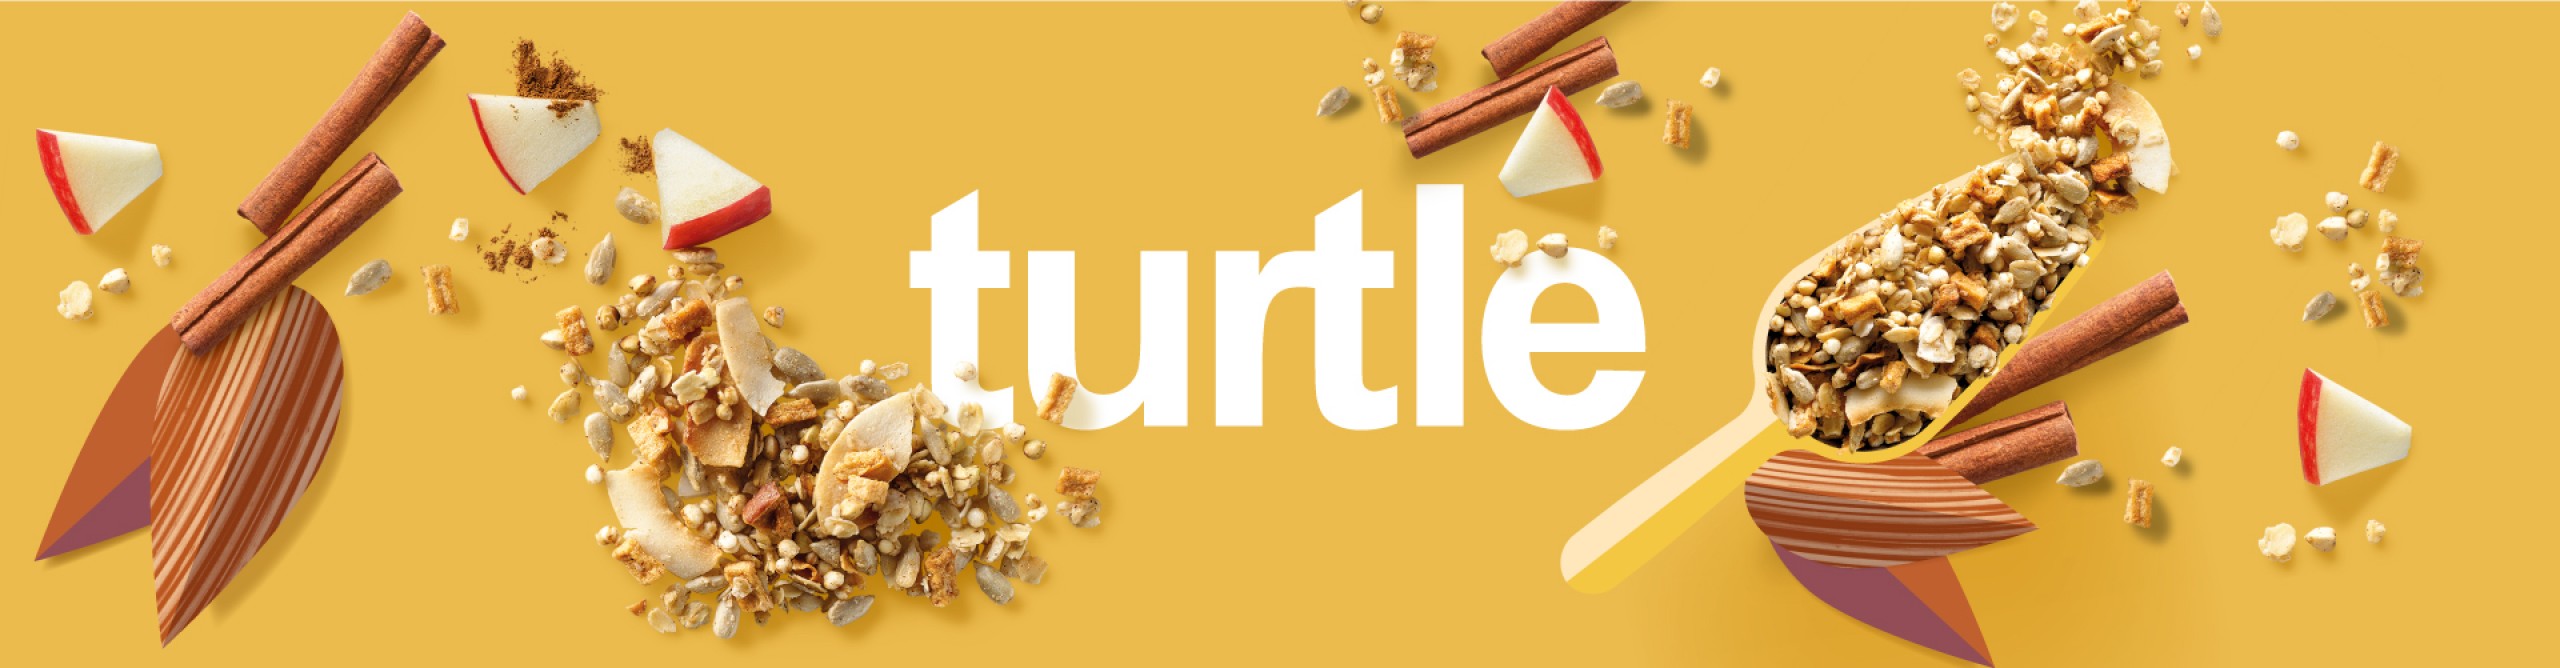 Quatre Mains package design - Package design turtle, granola